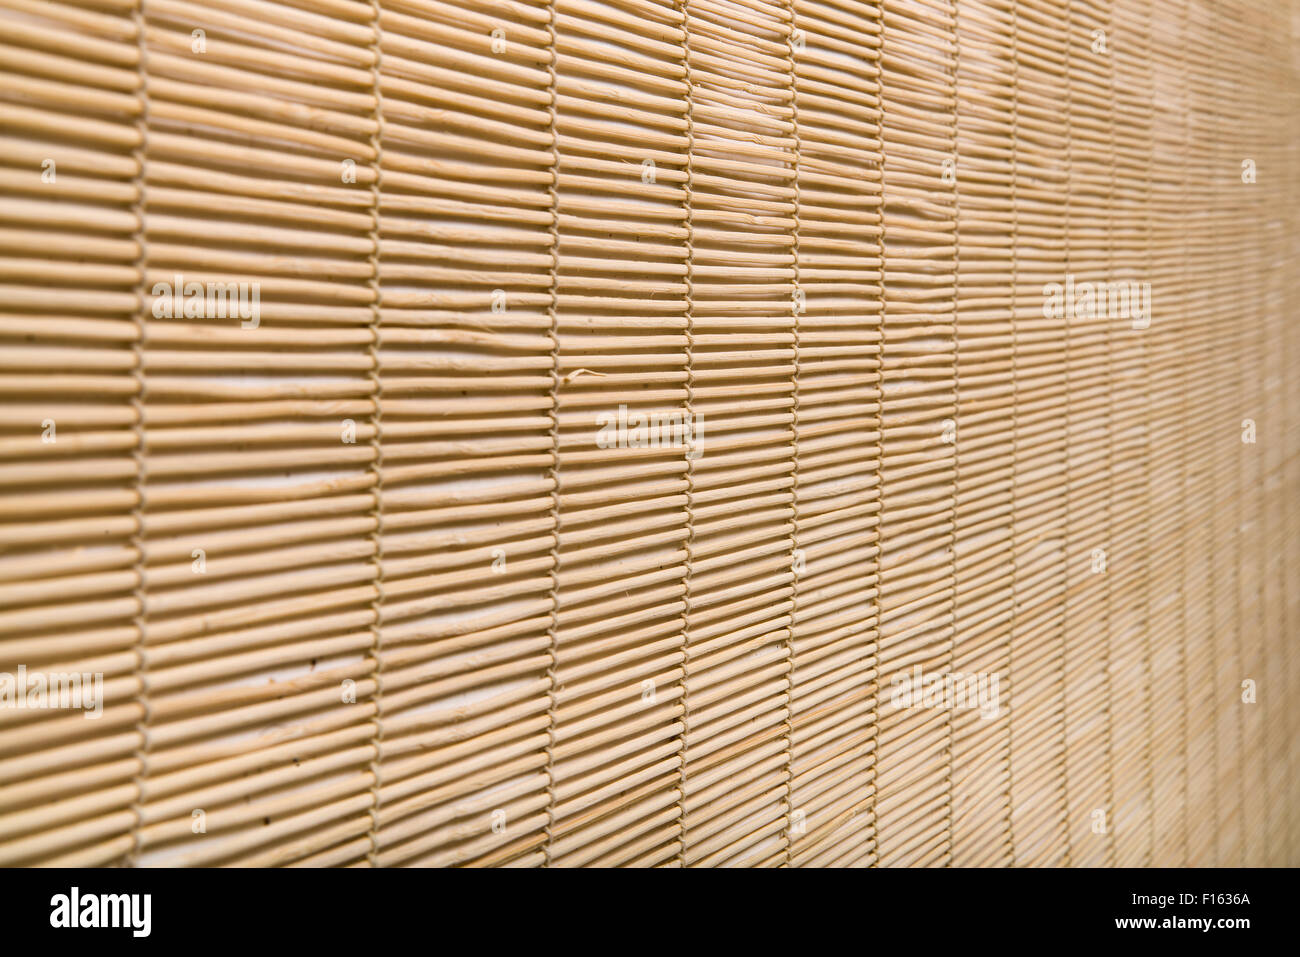 background of dry bamboo or straw, horizontal photo Stock Photo